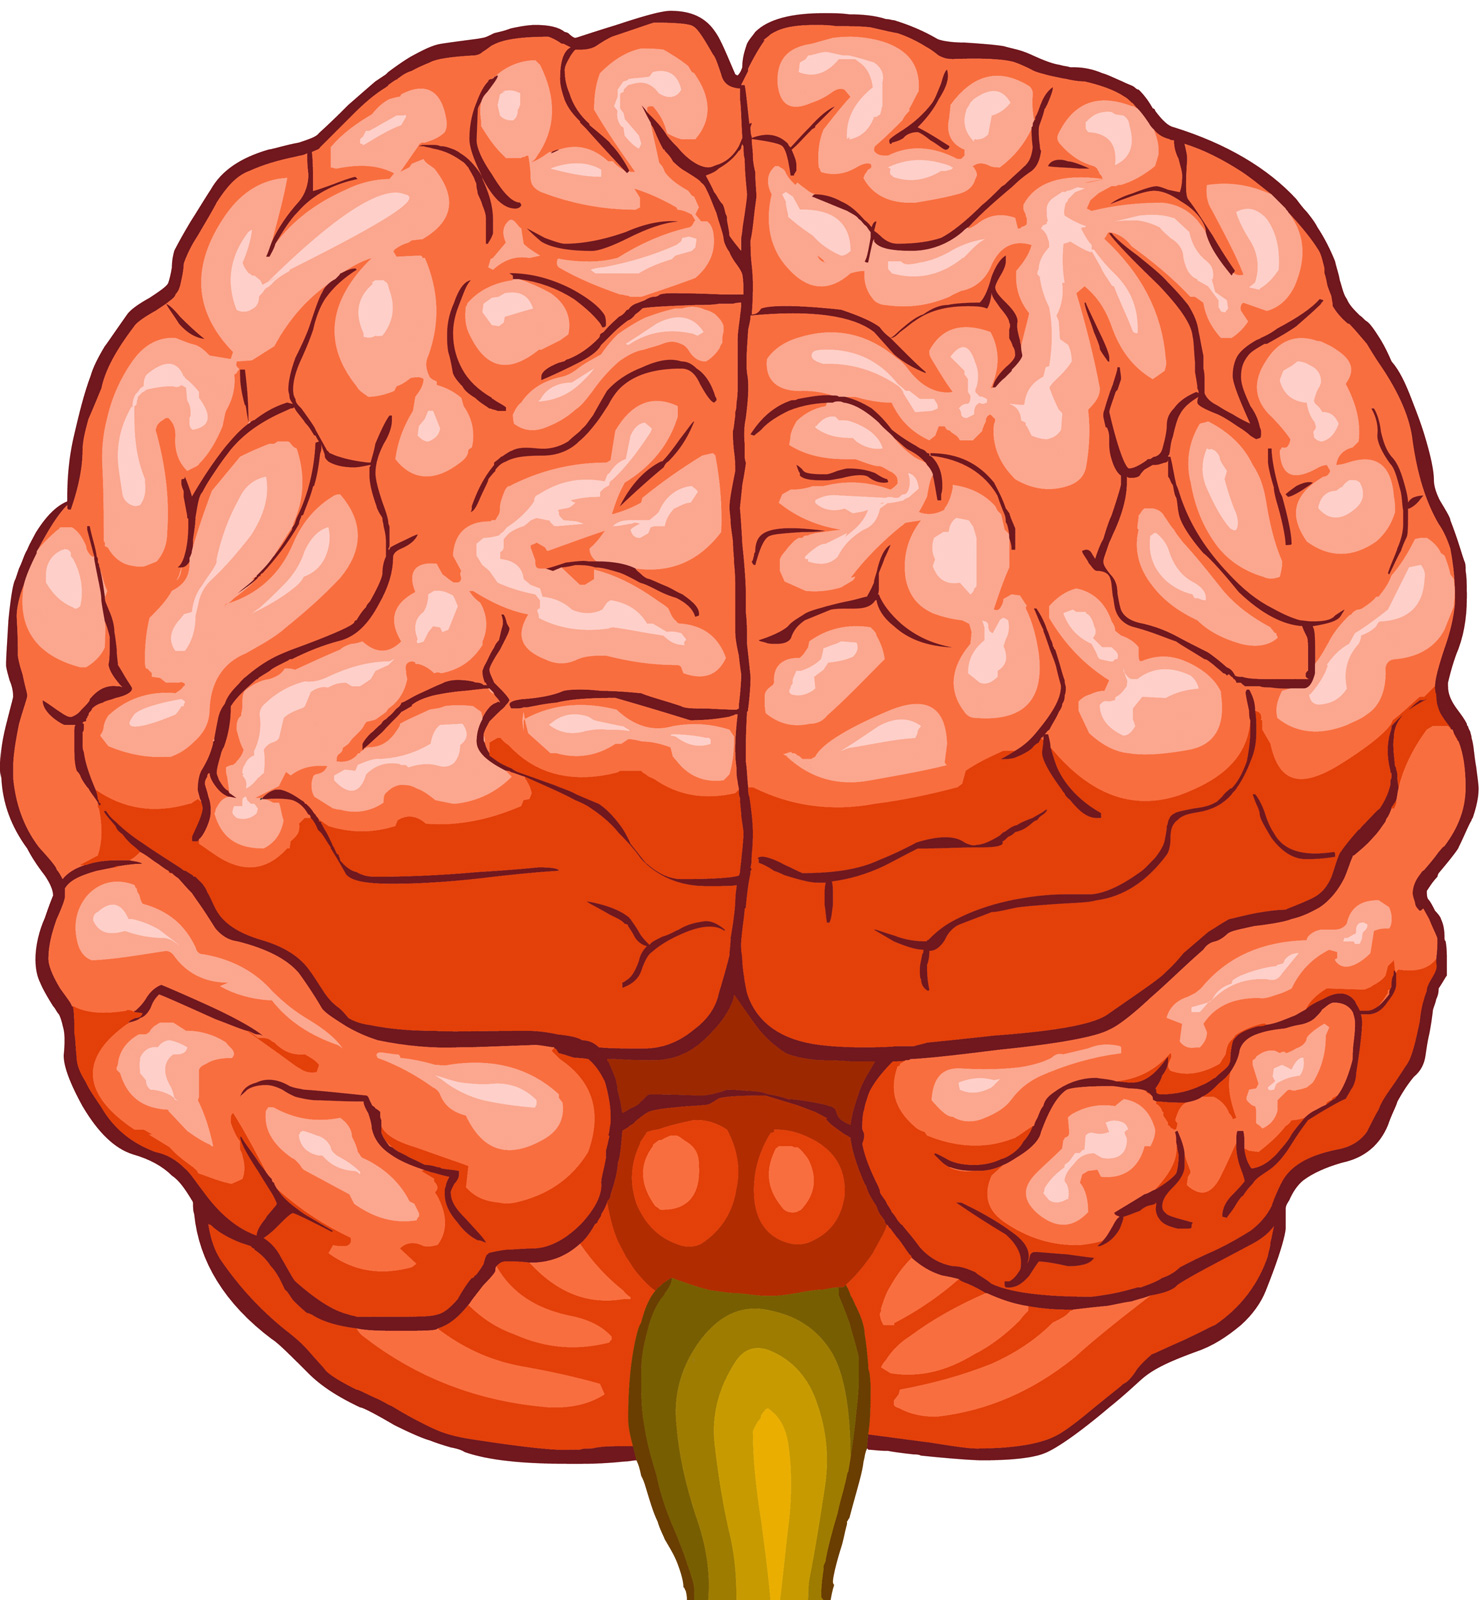 Мозг остановился. Мозг рисунок. Мозг человека спереди. Человеческий мозг вид спереди. Мозг человека для детей.